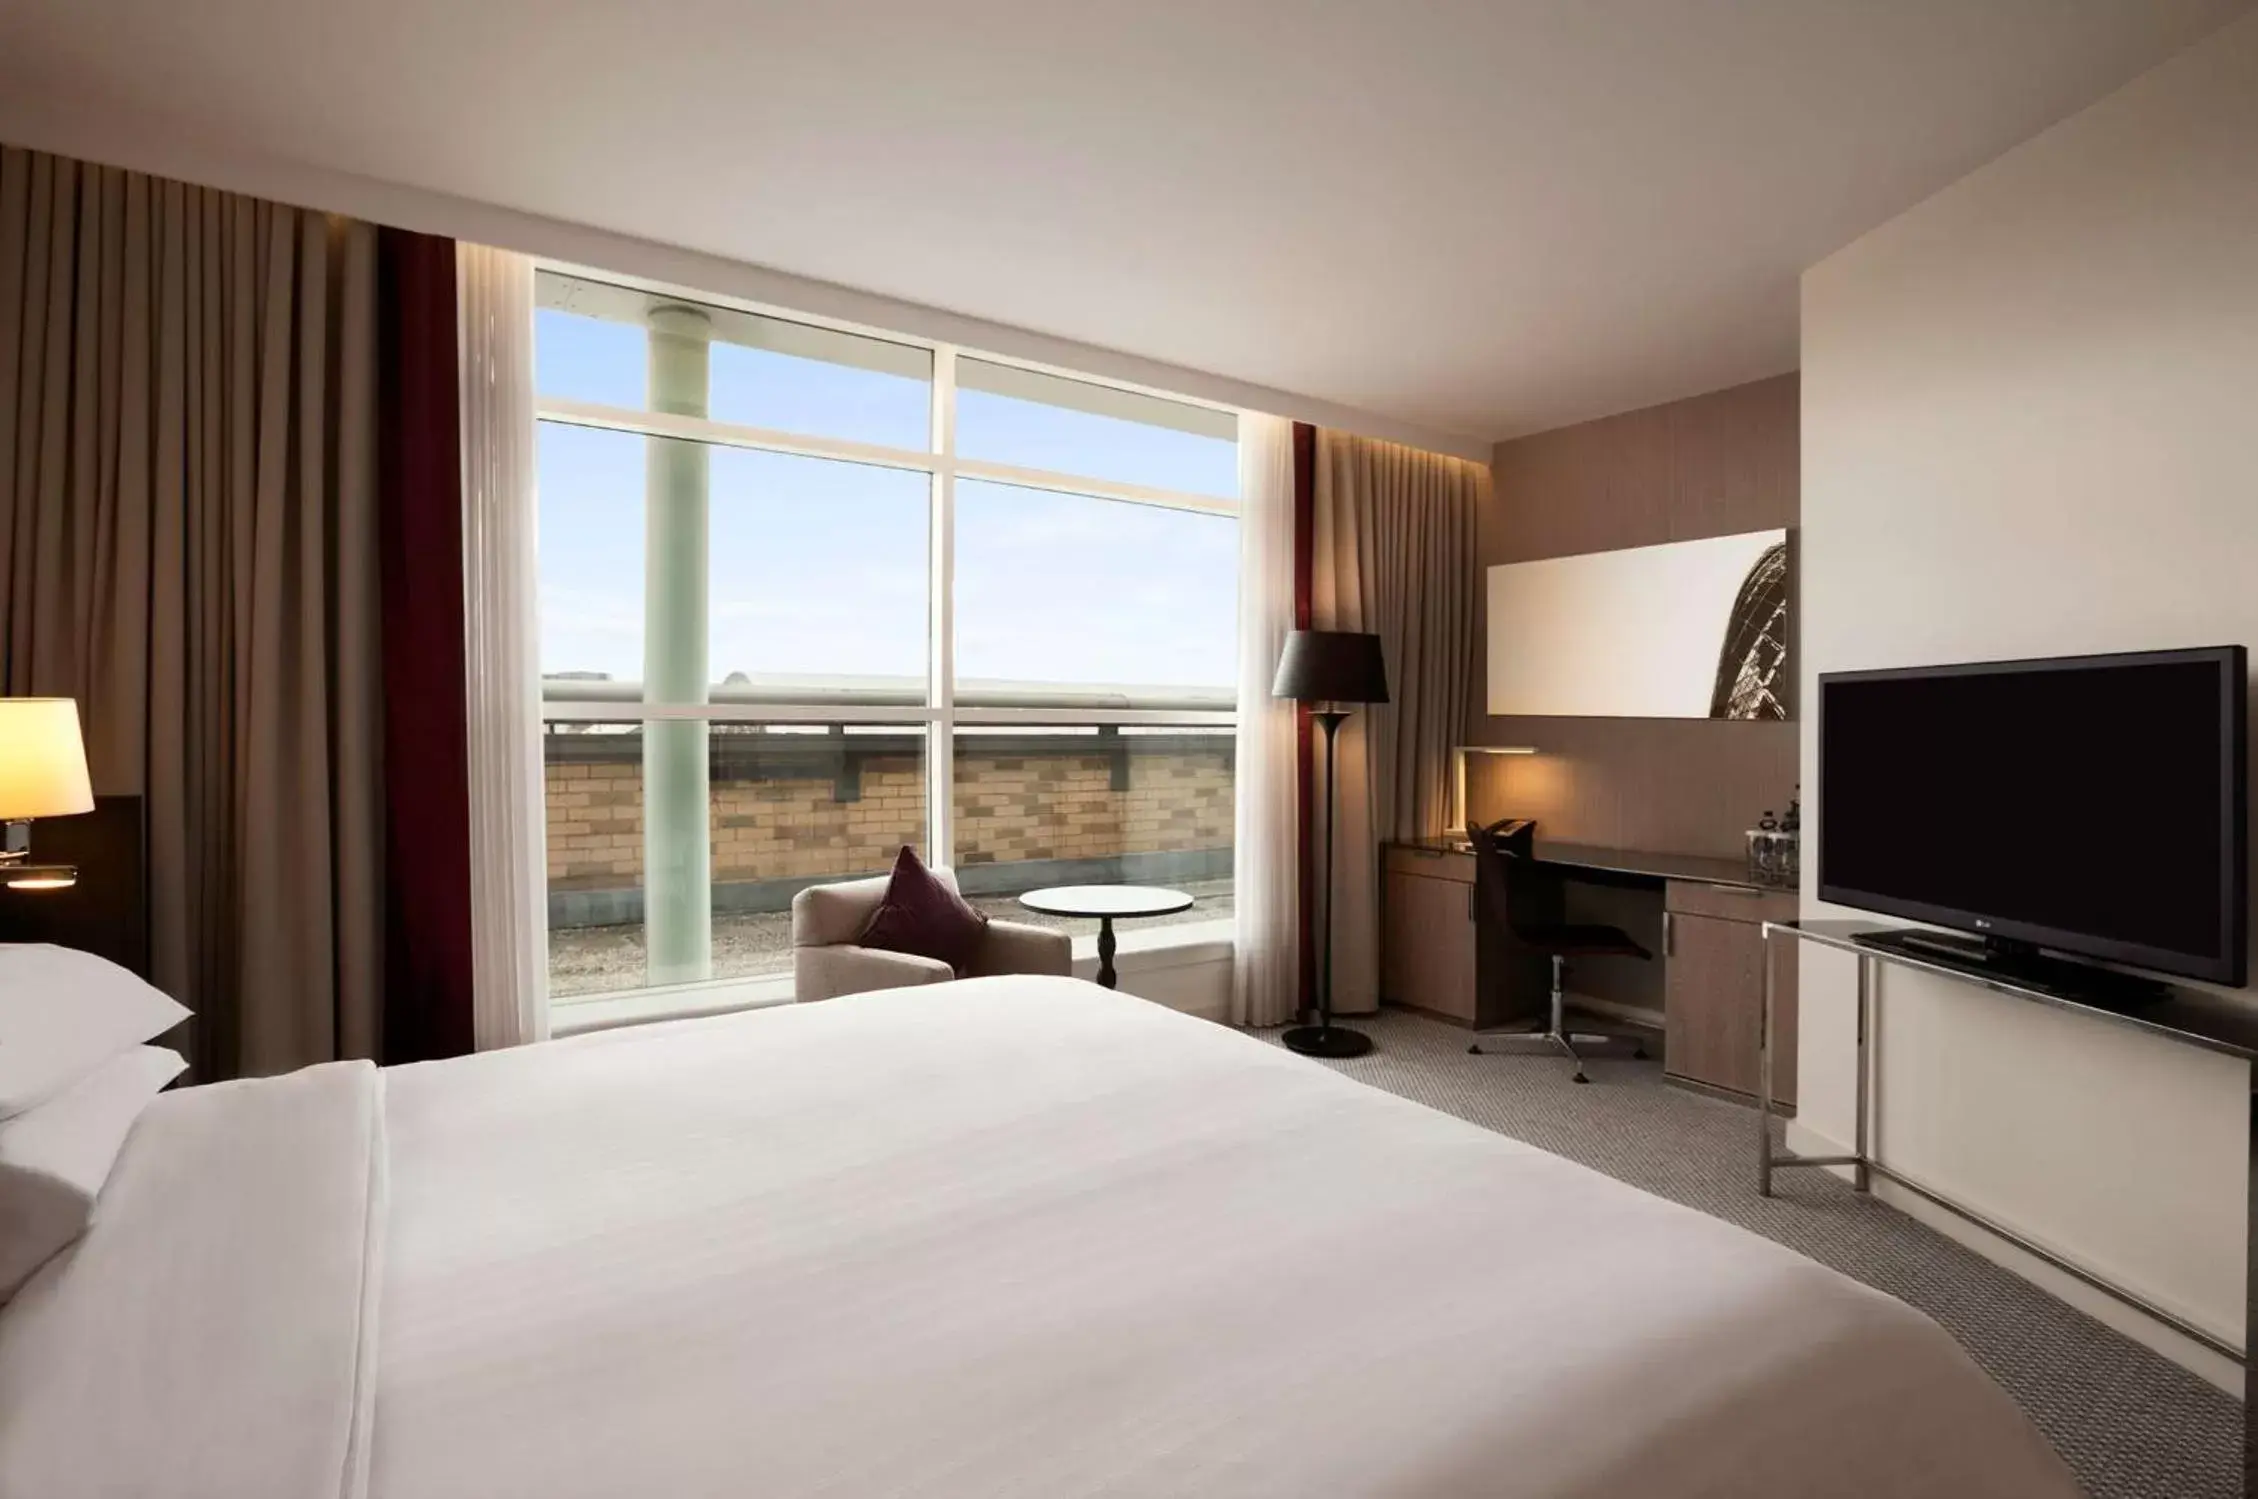 King Executive Room with Lounge Access in Hilton London Angel Islington